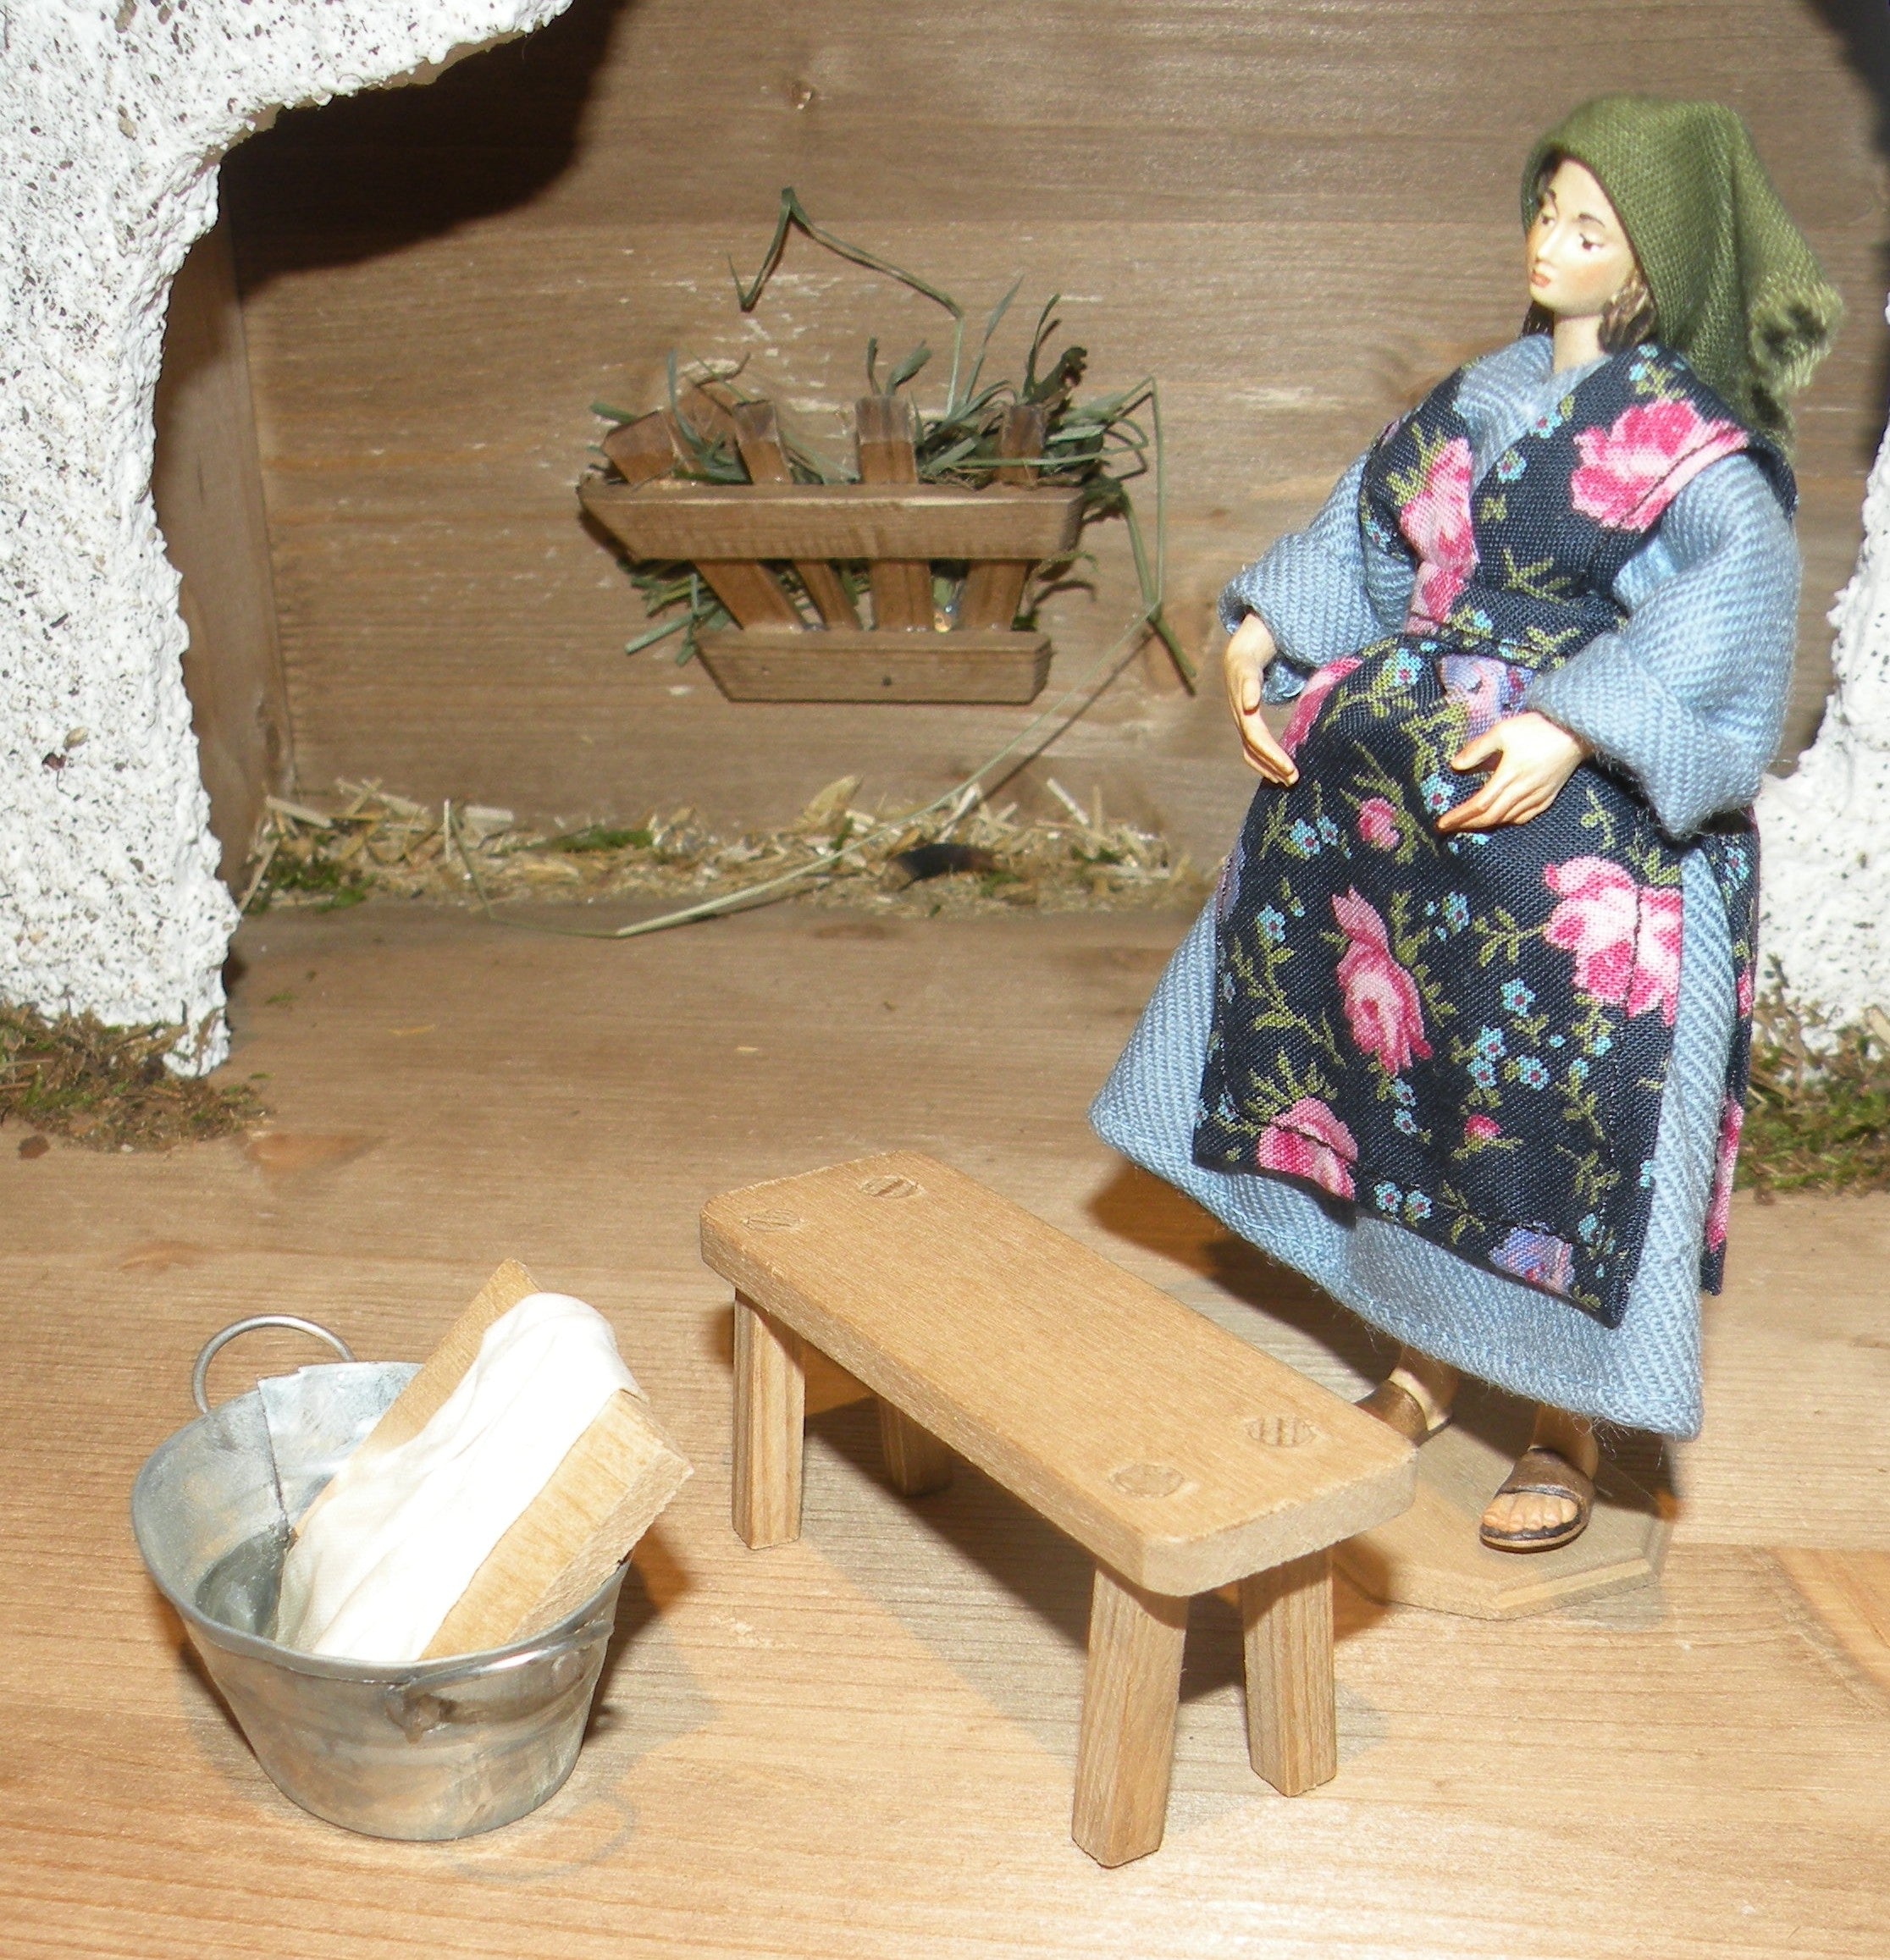 Washerwoman with basin - Folk nativity dressed- 10901-491